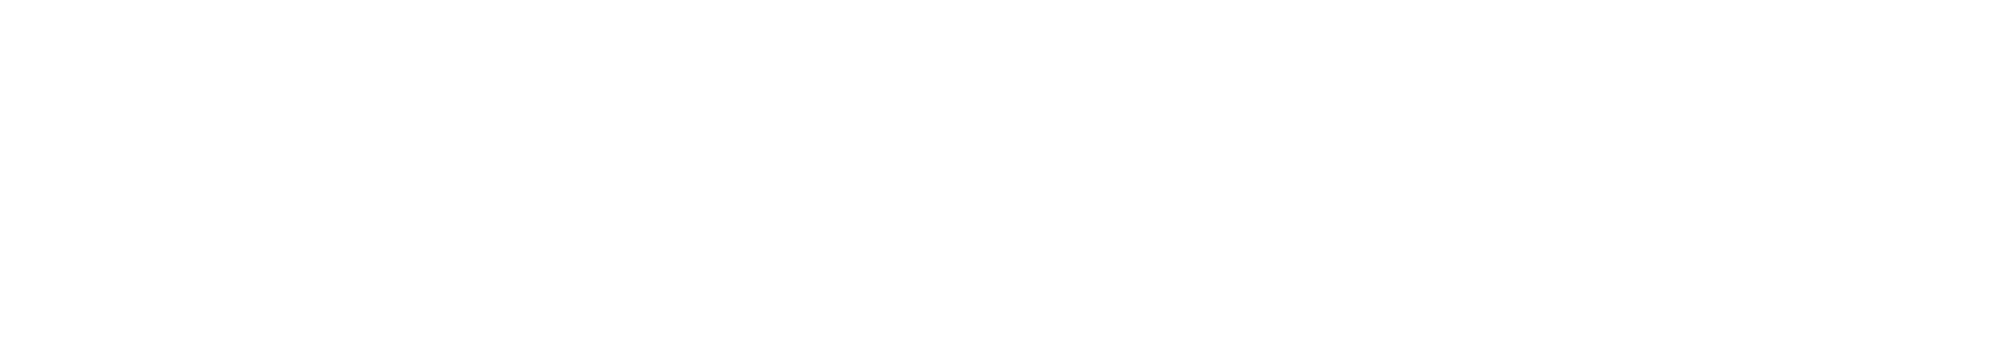 CompTech-LINK Multimedia